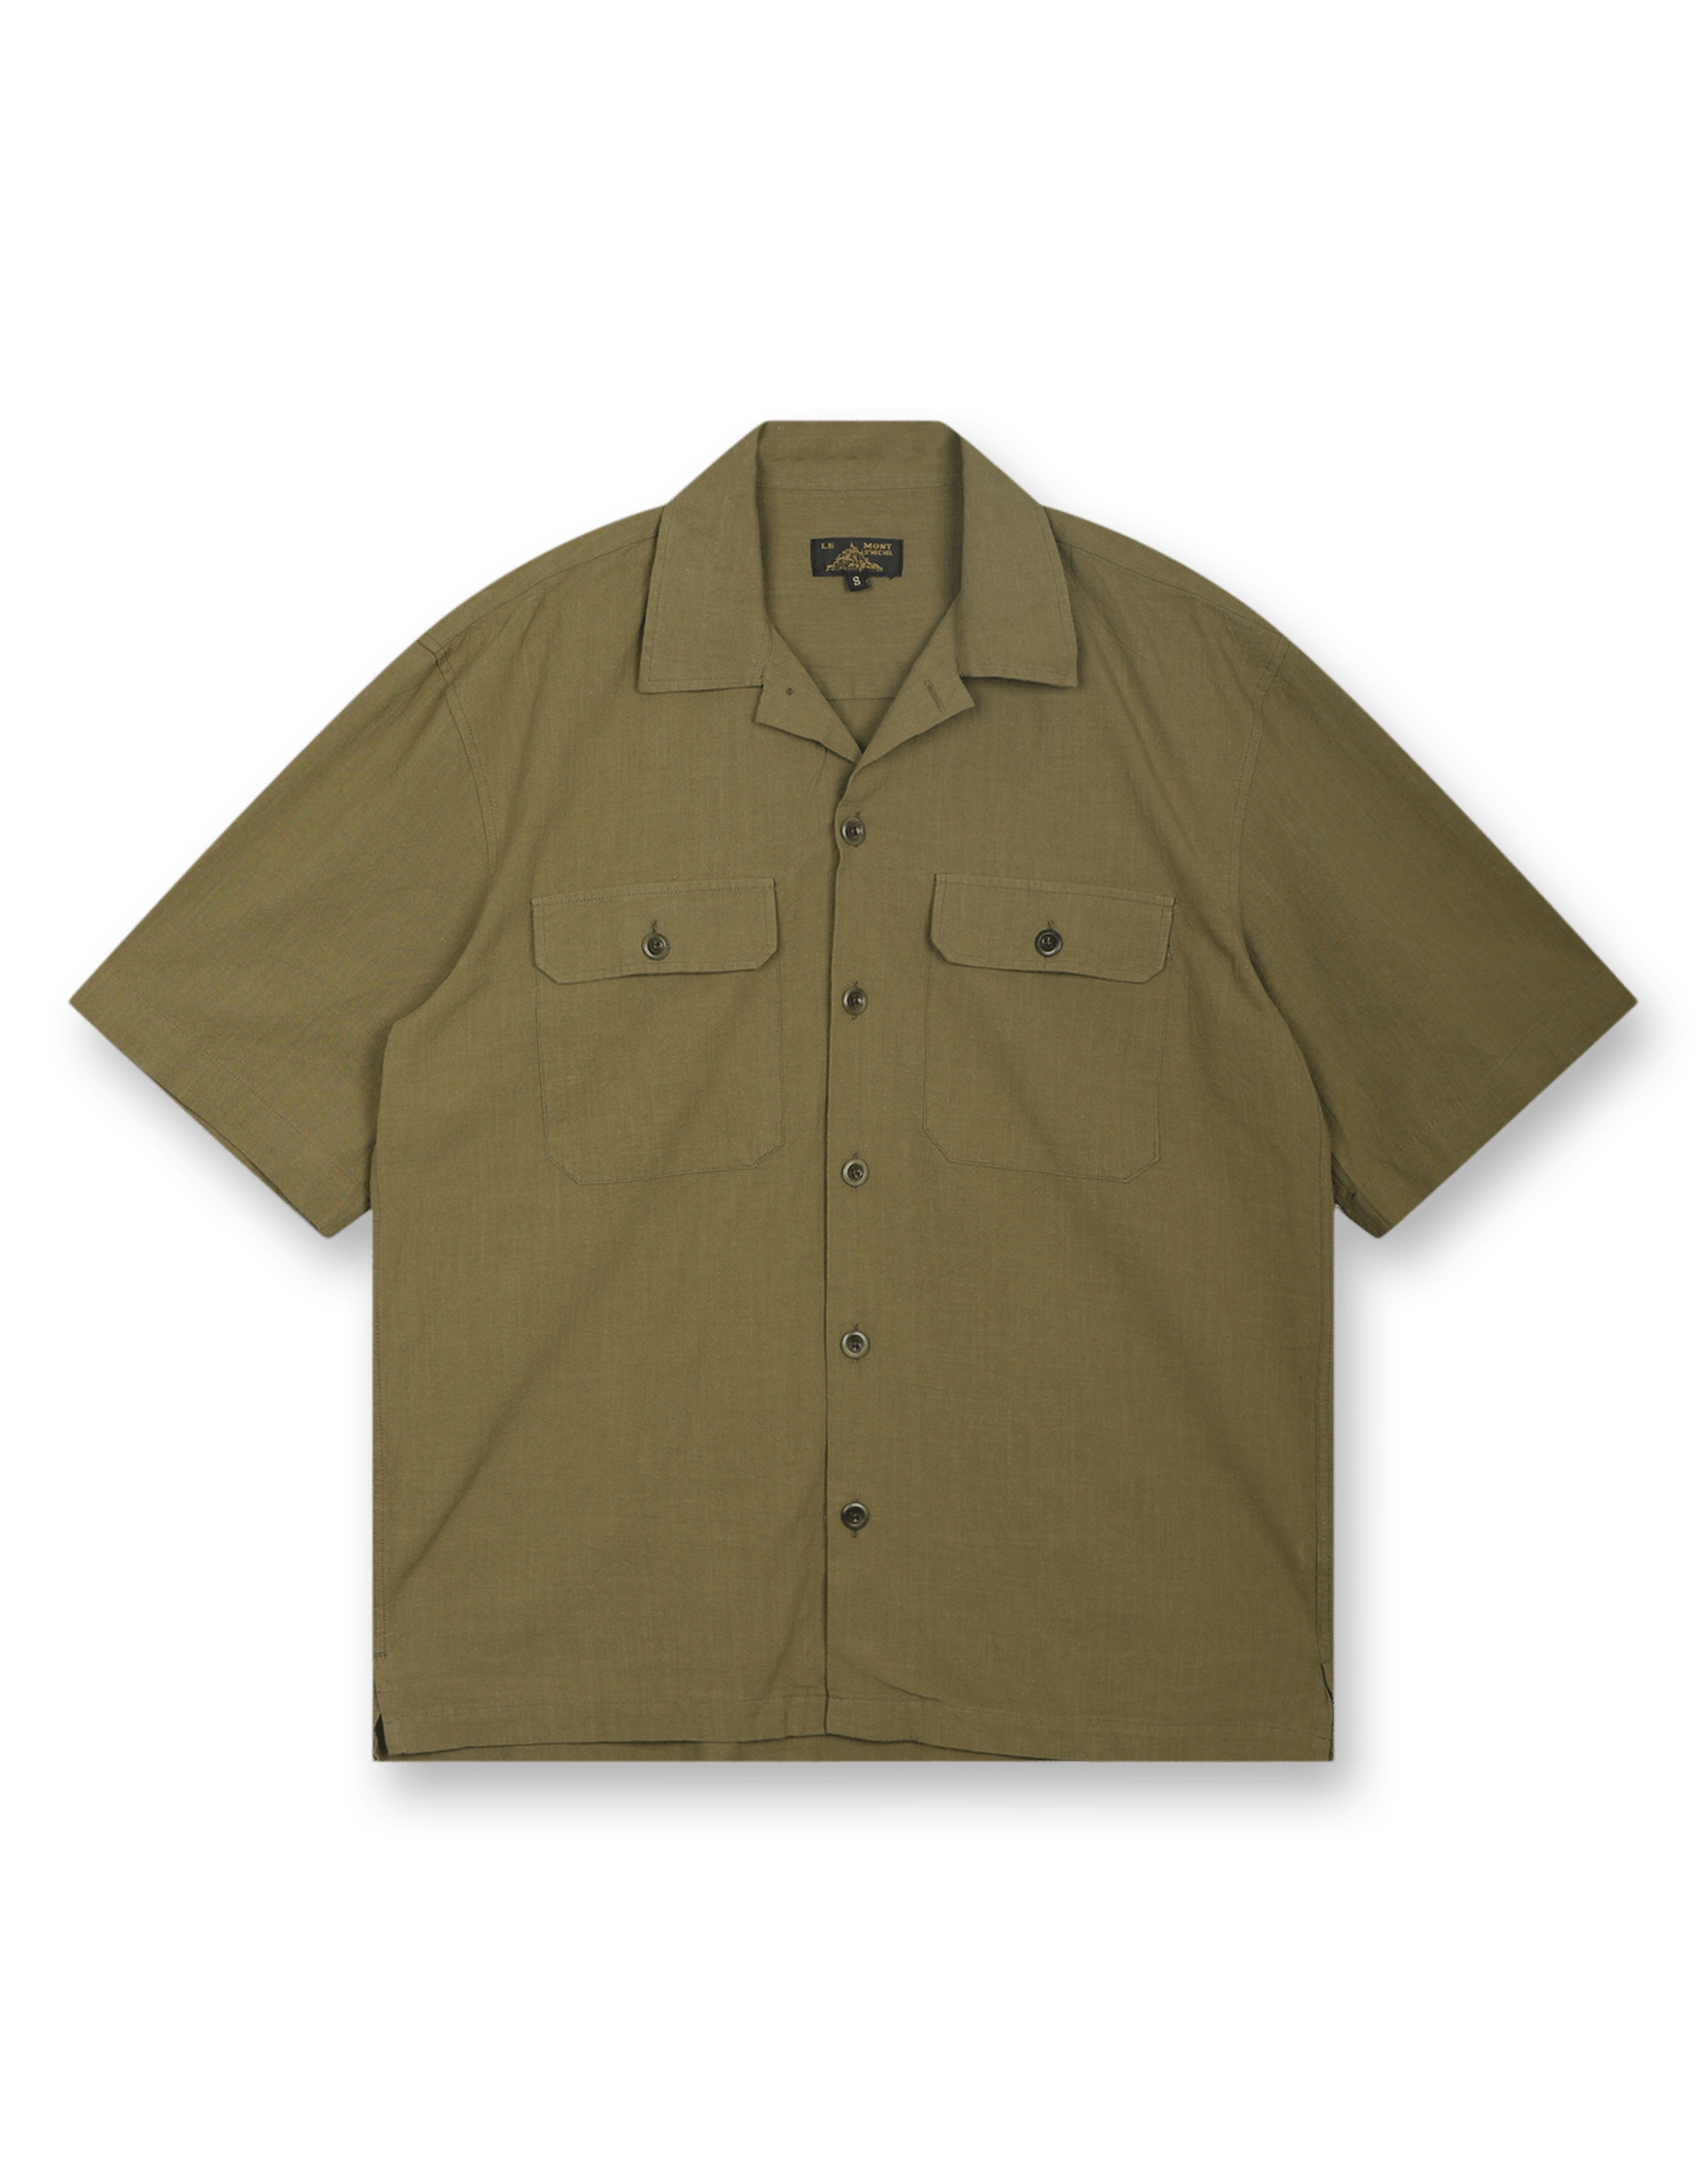 Cadell Military Pocket Shirt